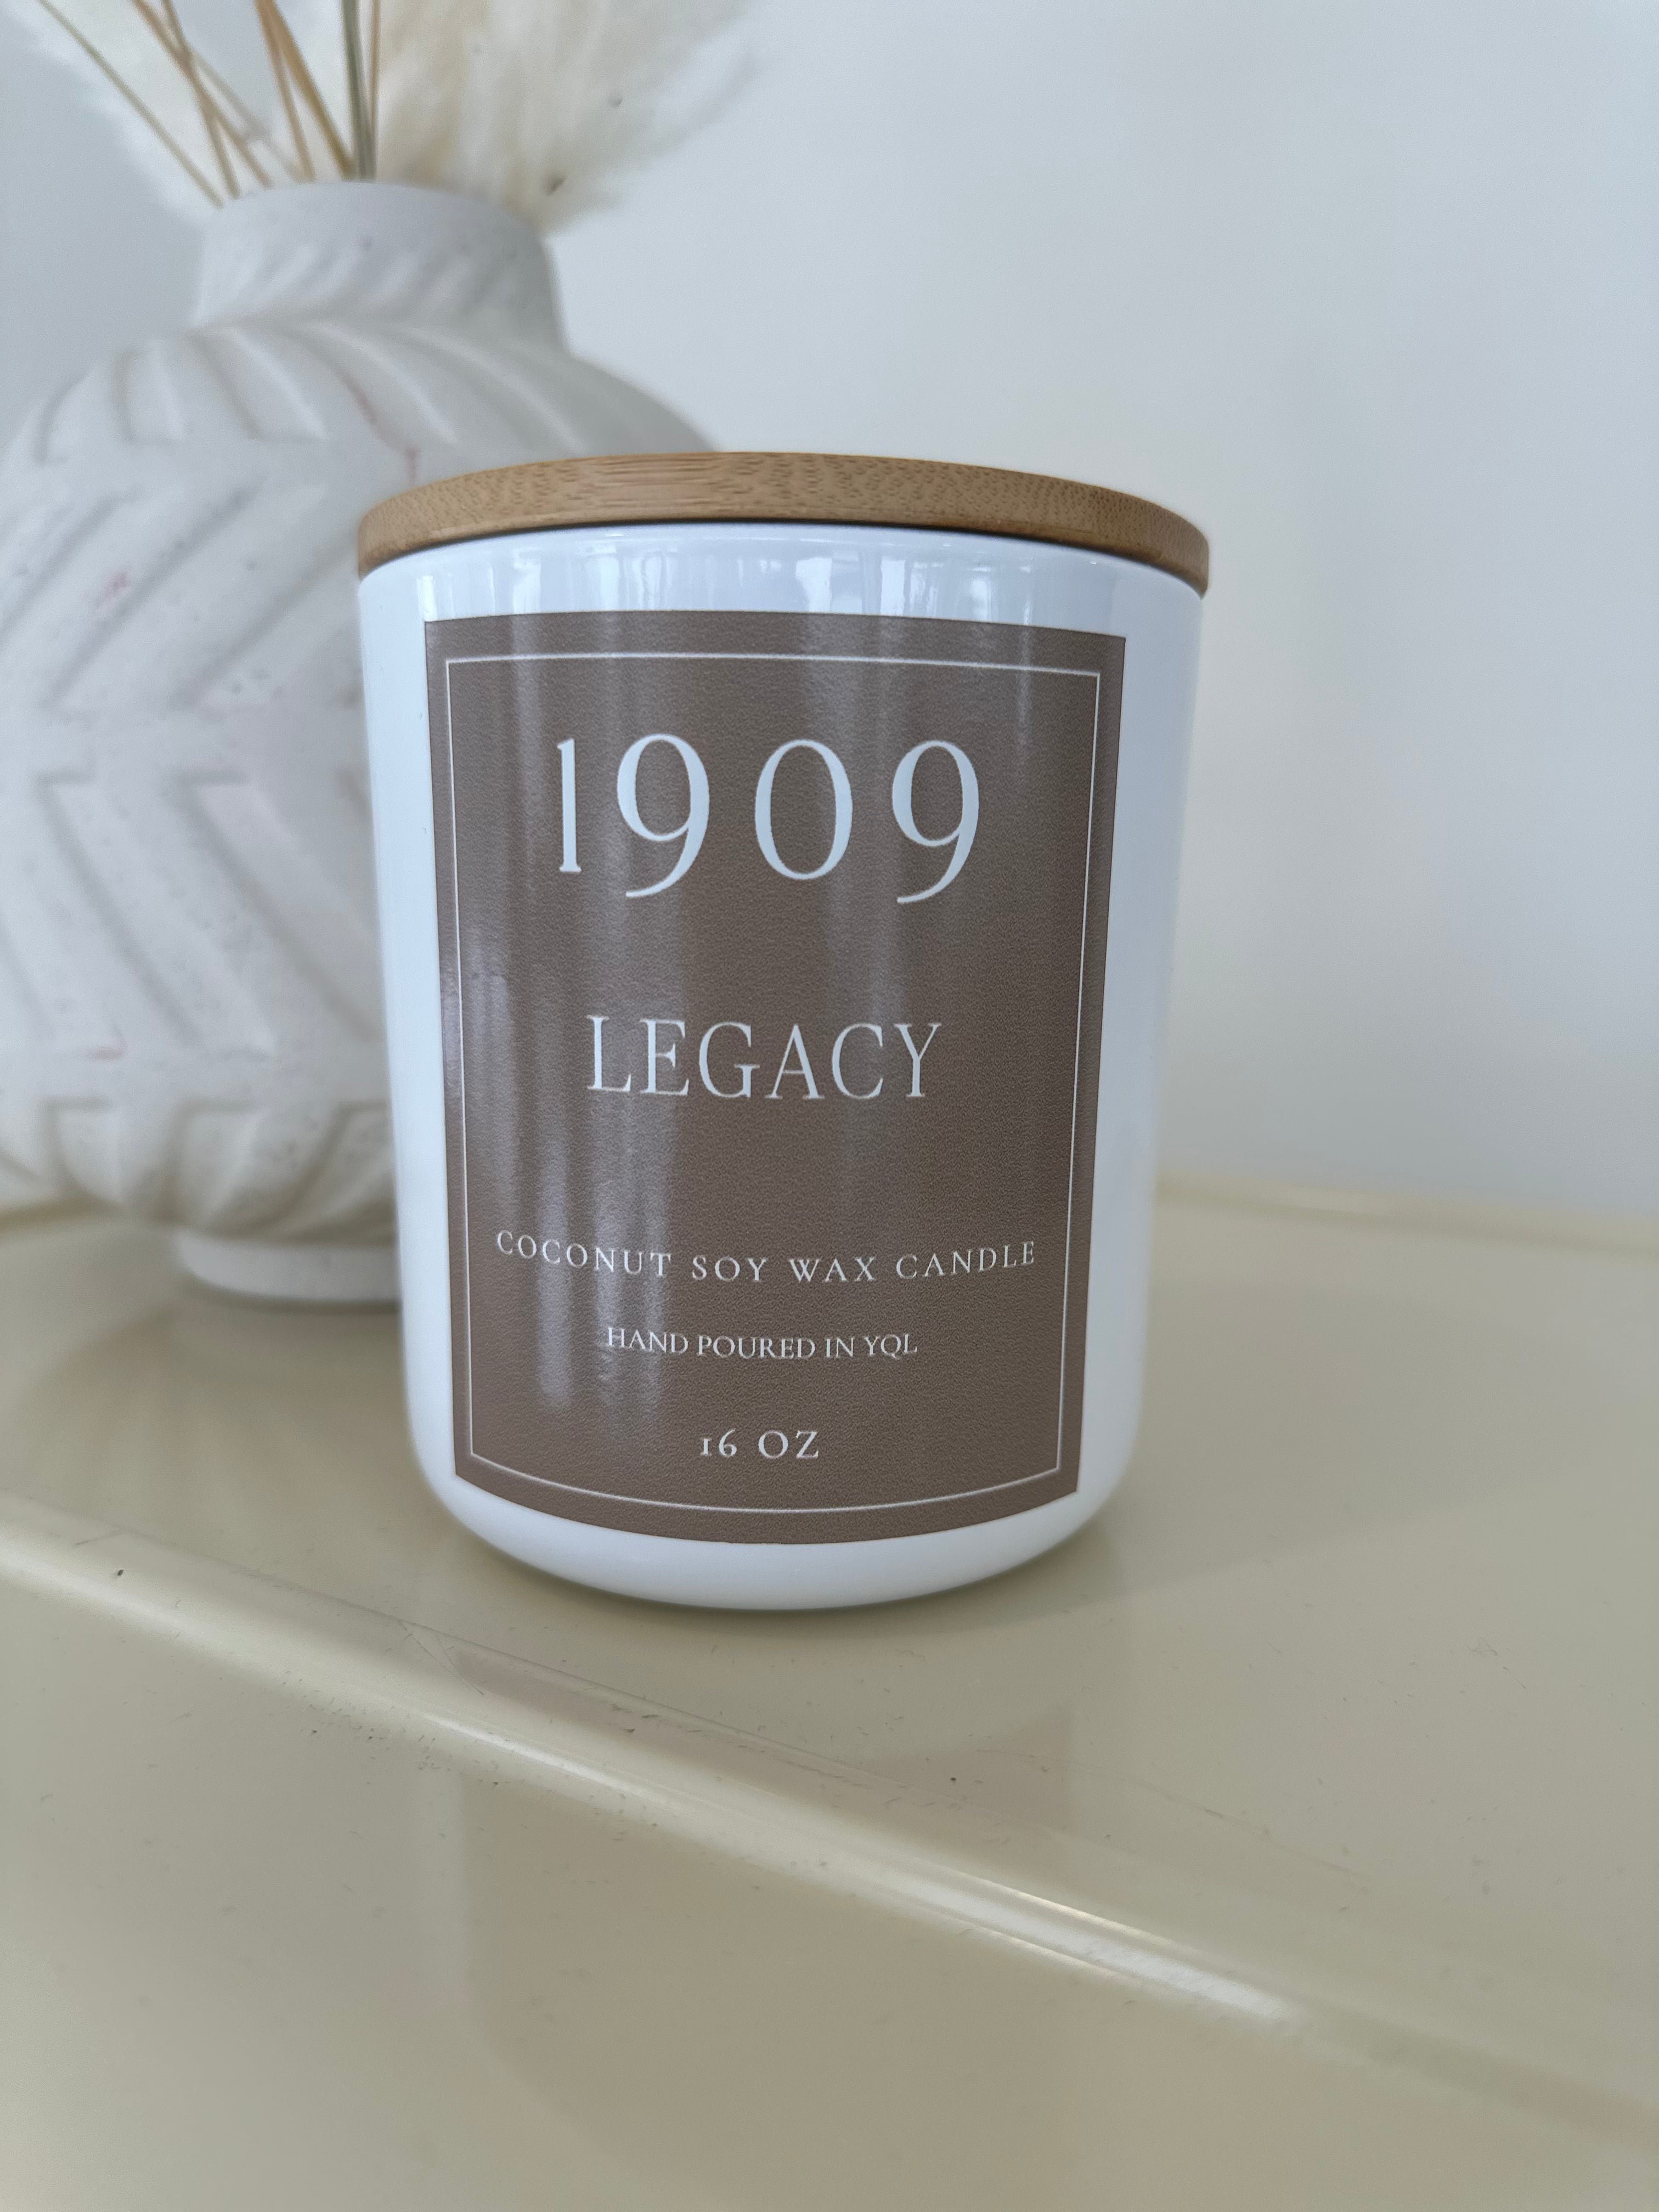 1909 Legacy Candle